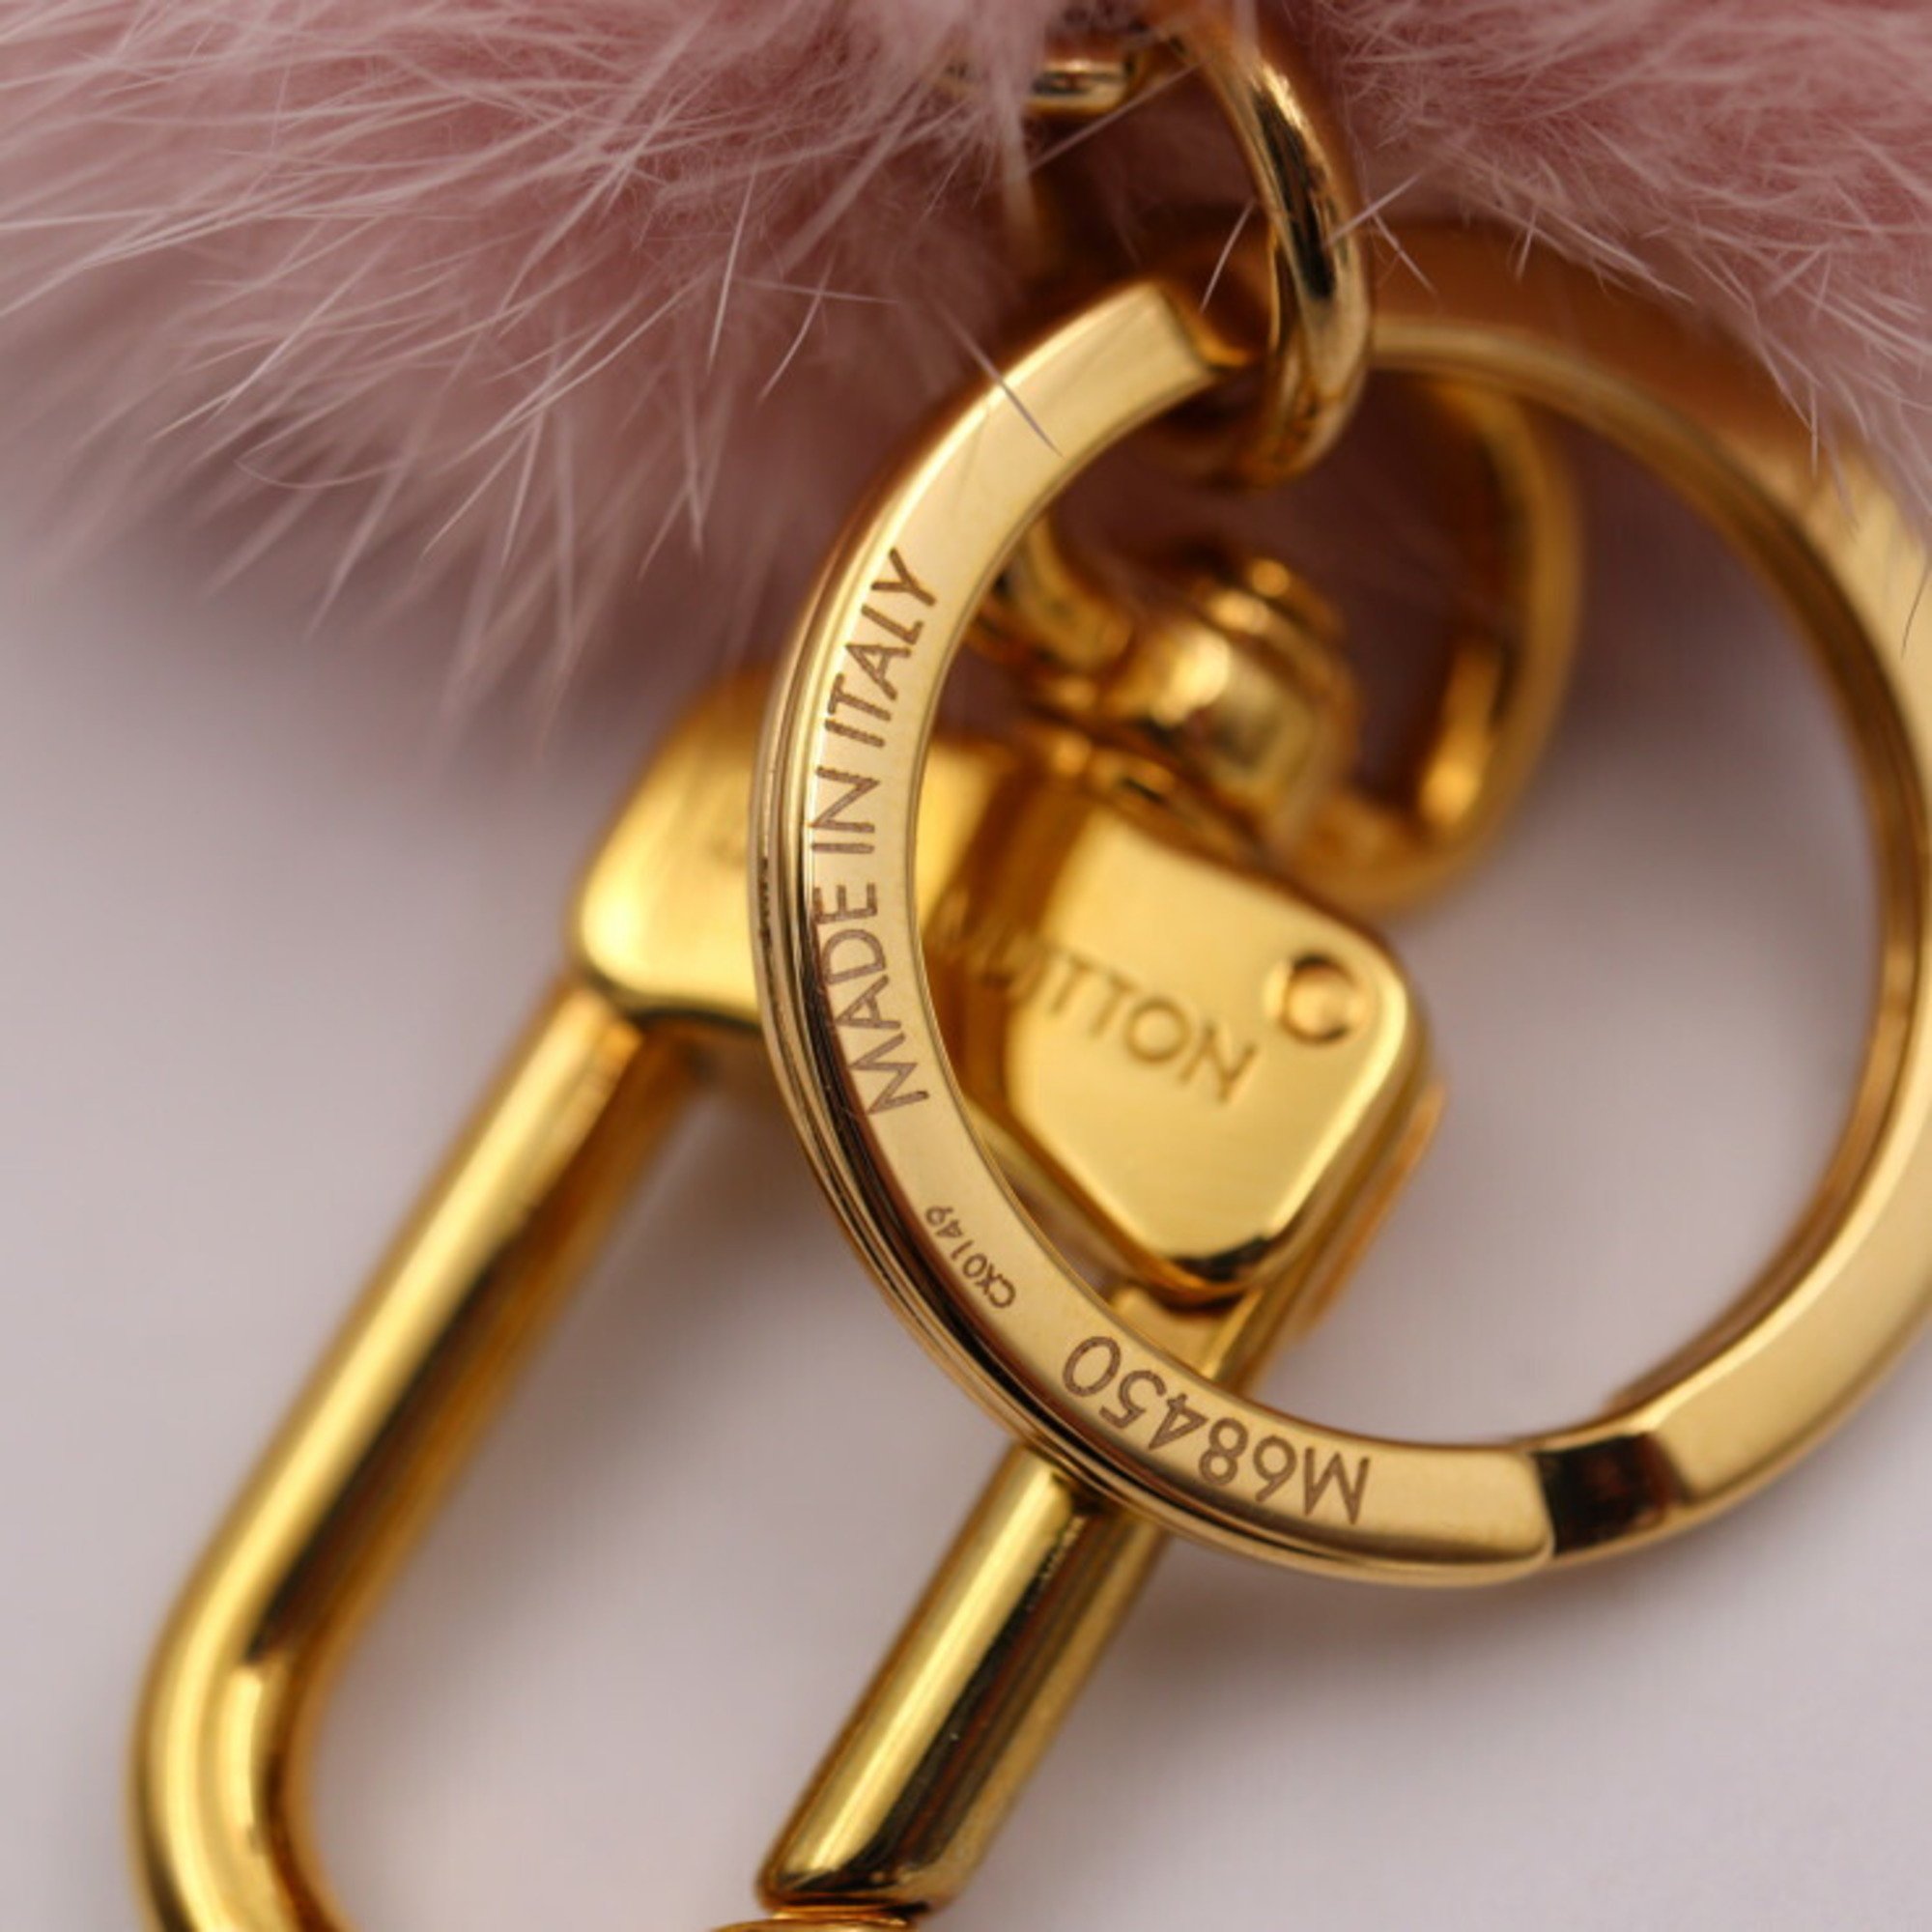 LOUIS VUITTON Louis Vuitton Bijoux Sac Wild Fur Keychain M68450 Mink fur x leather Pink Keyring Bag charm Animal